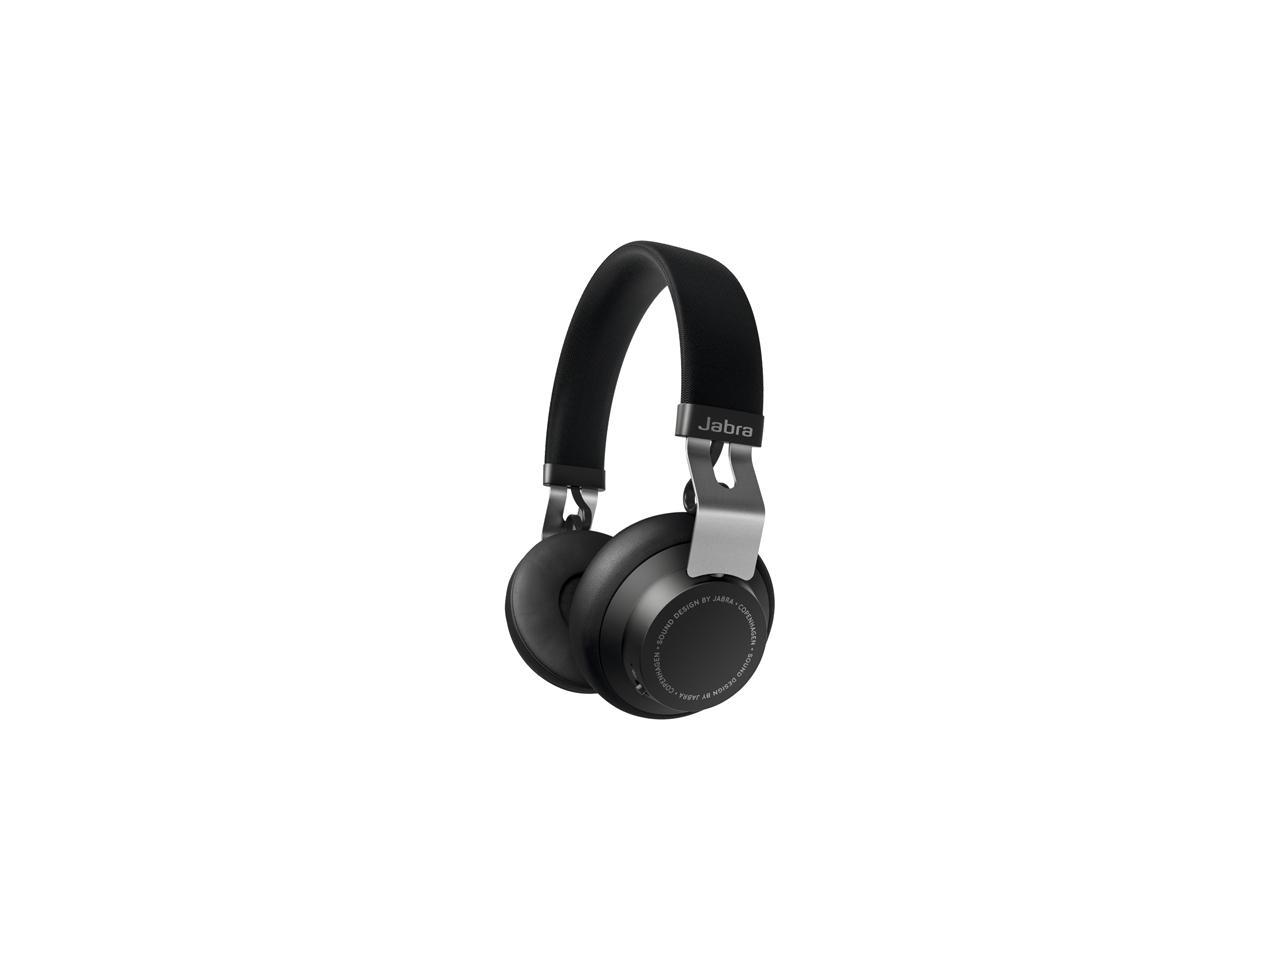 Jabra Elite 25h Wireless Bluetooth On-Ear Headphones $35